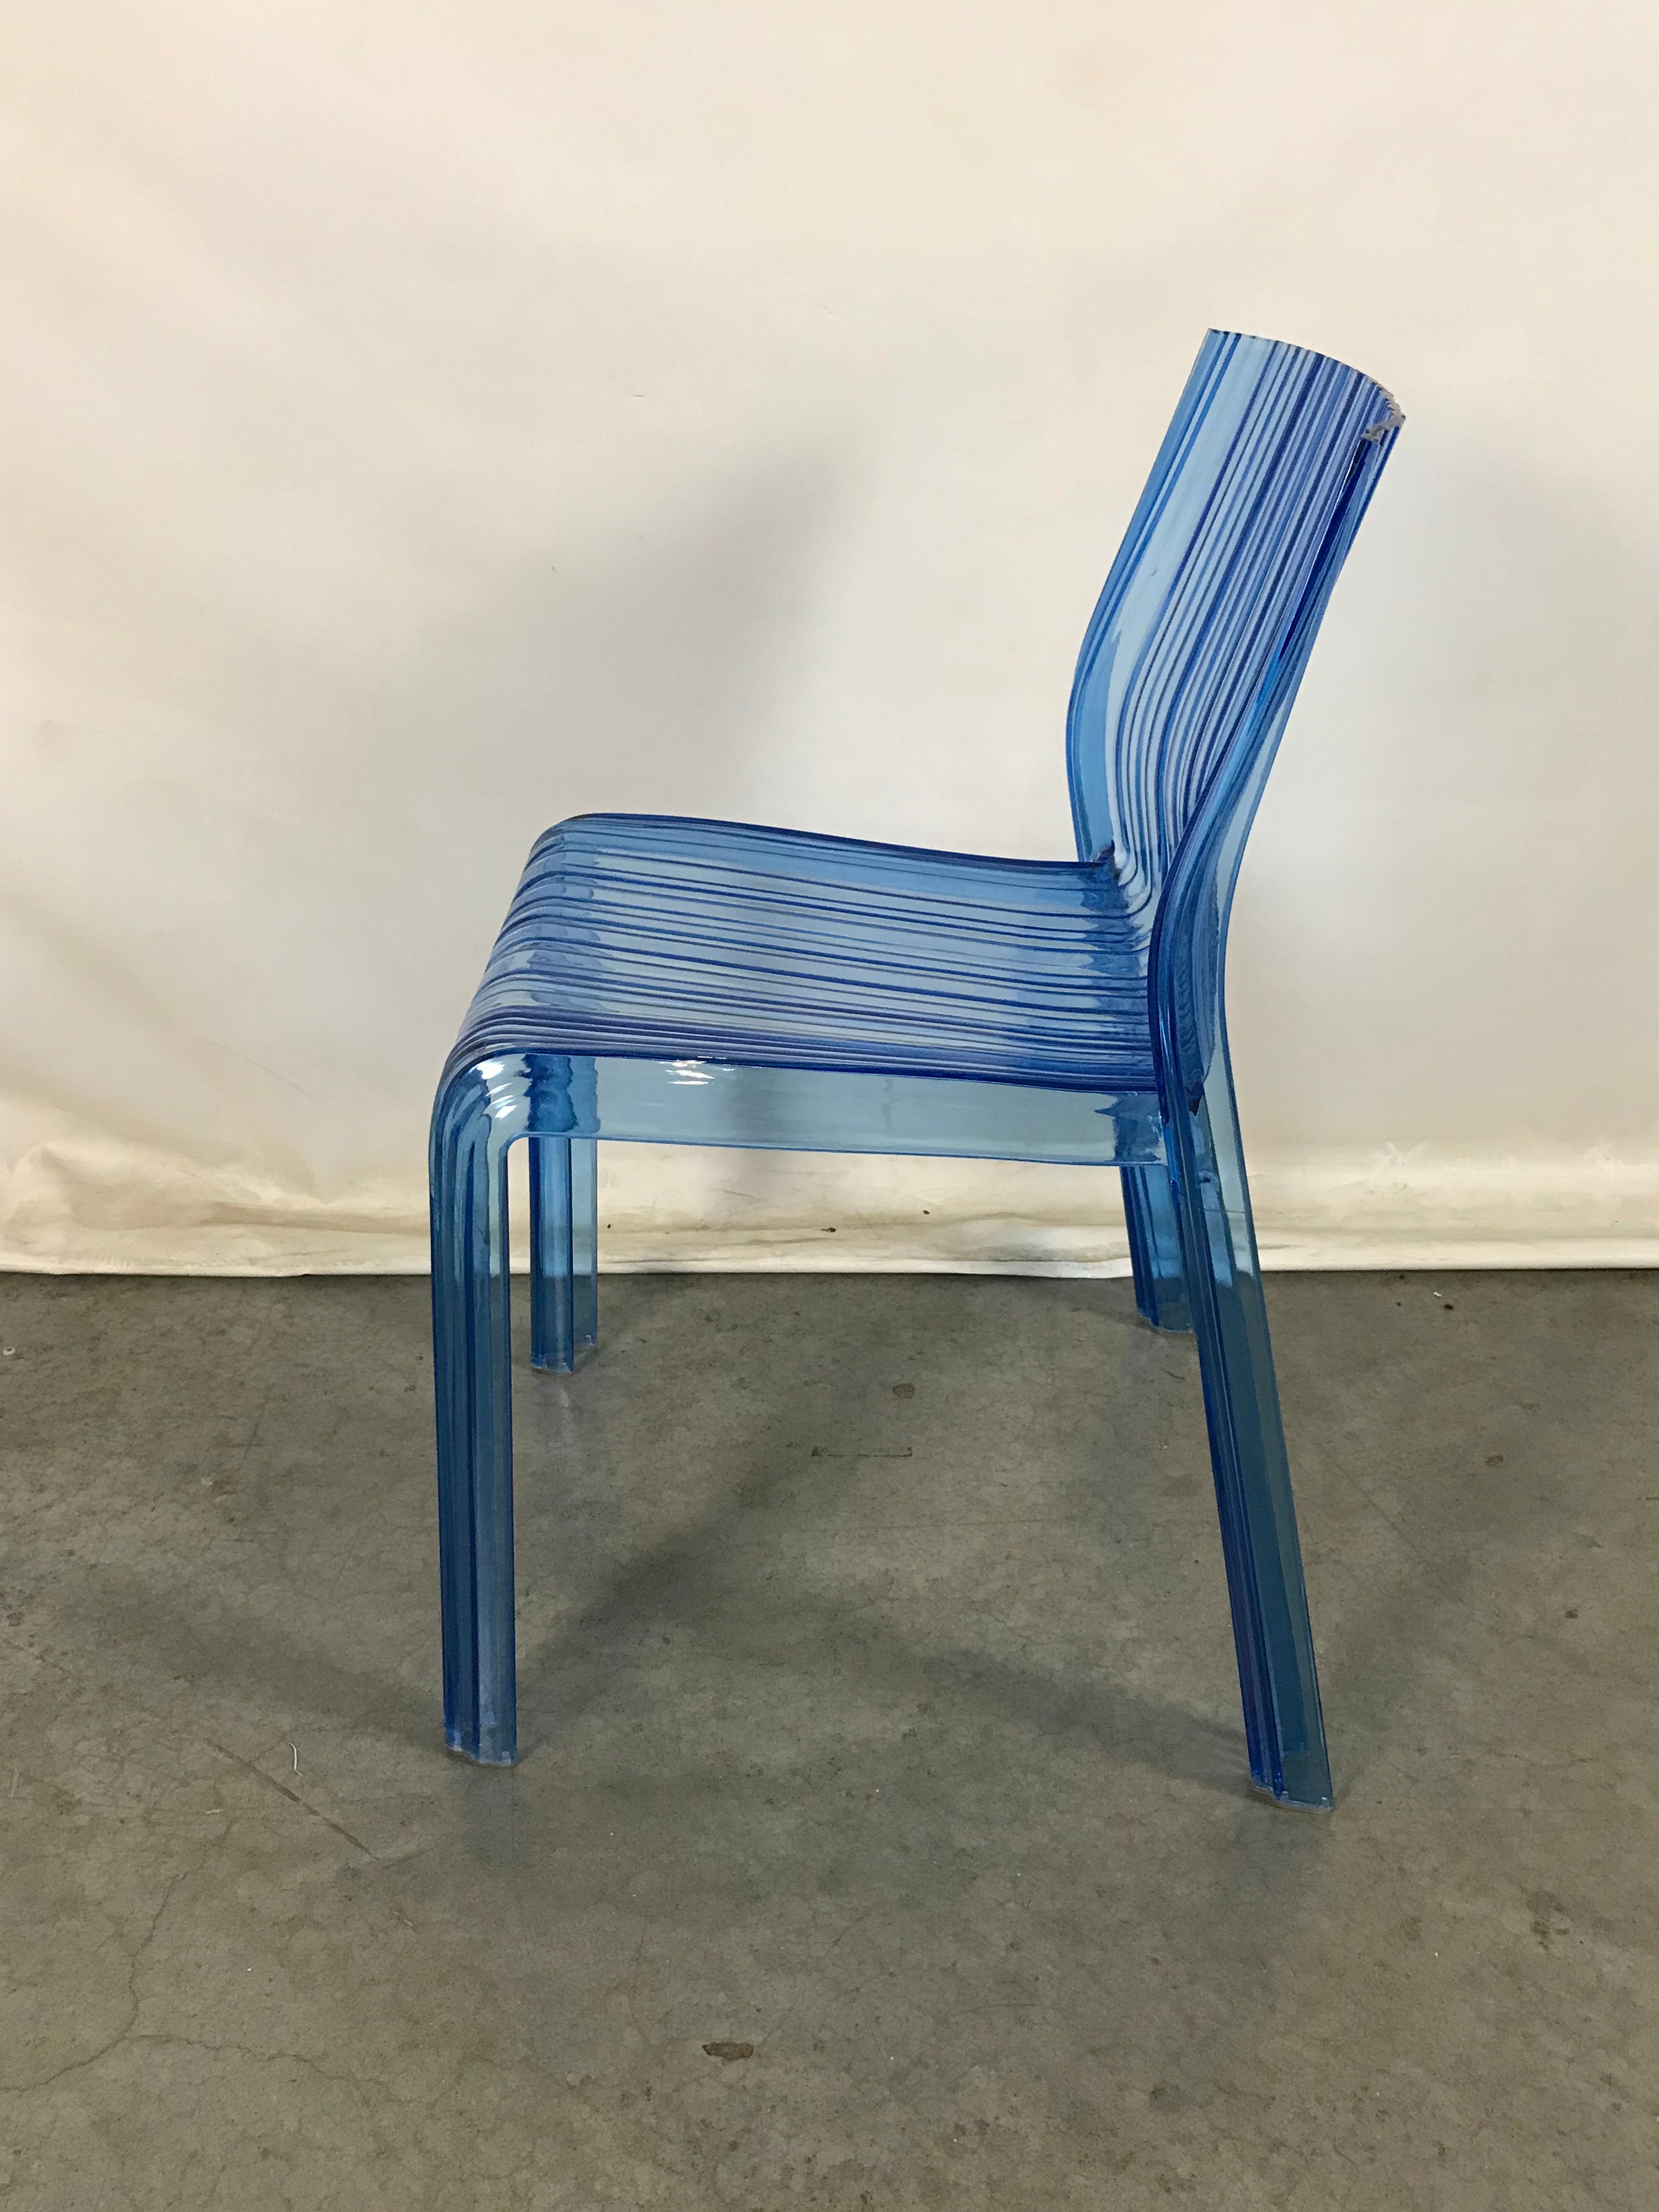 Blue Transparent Ruffled Plastic Chair